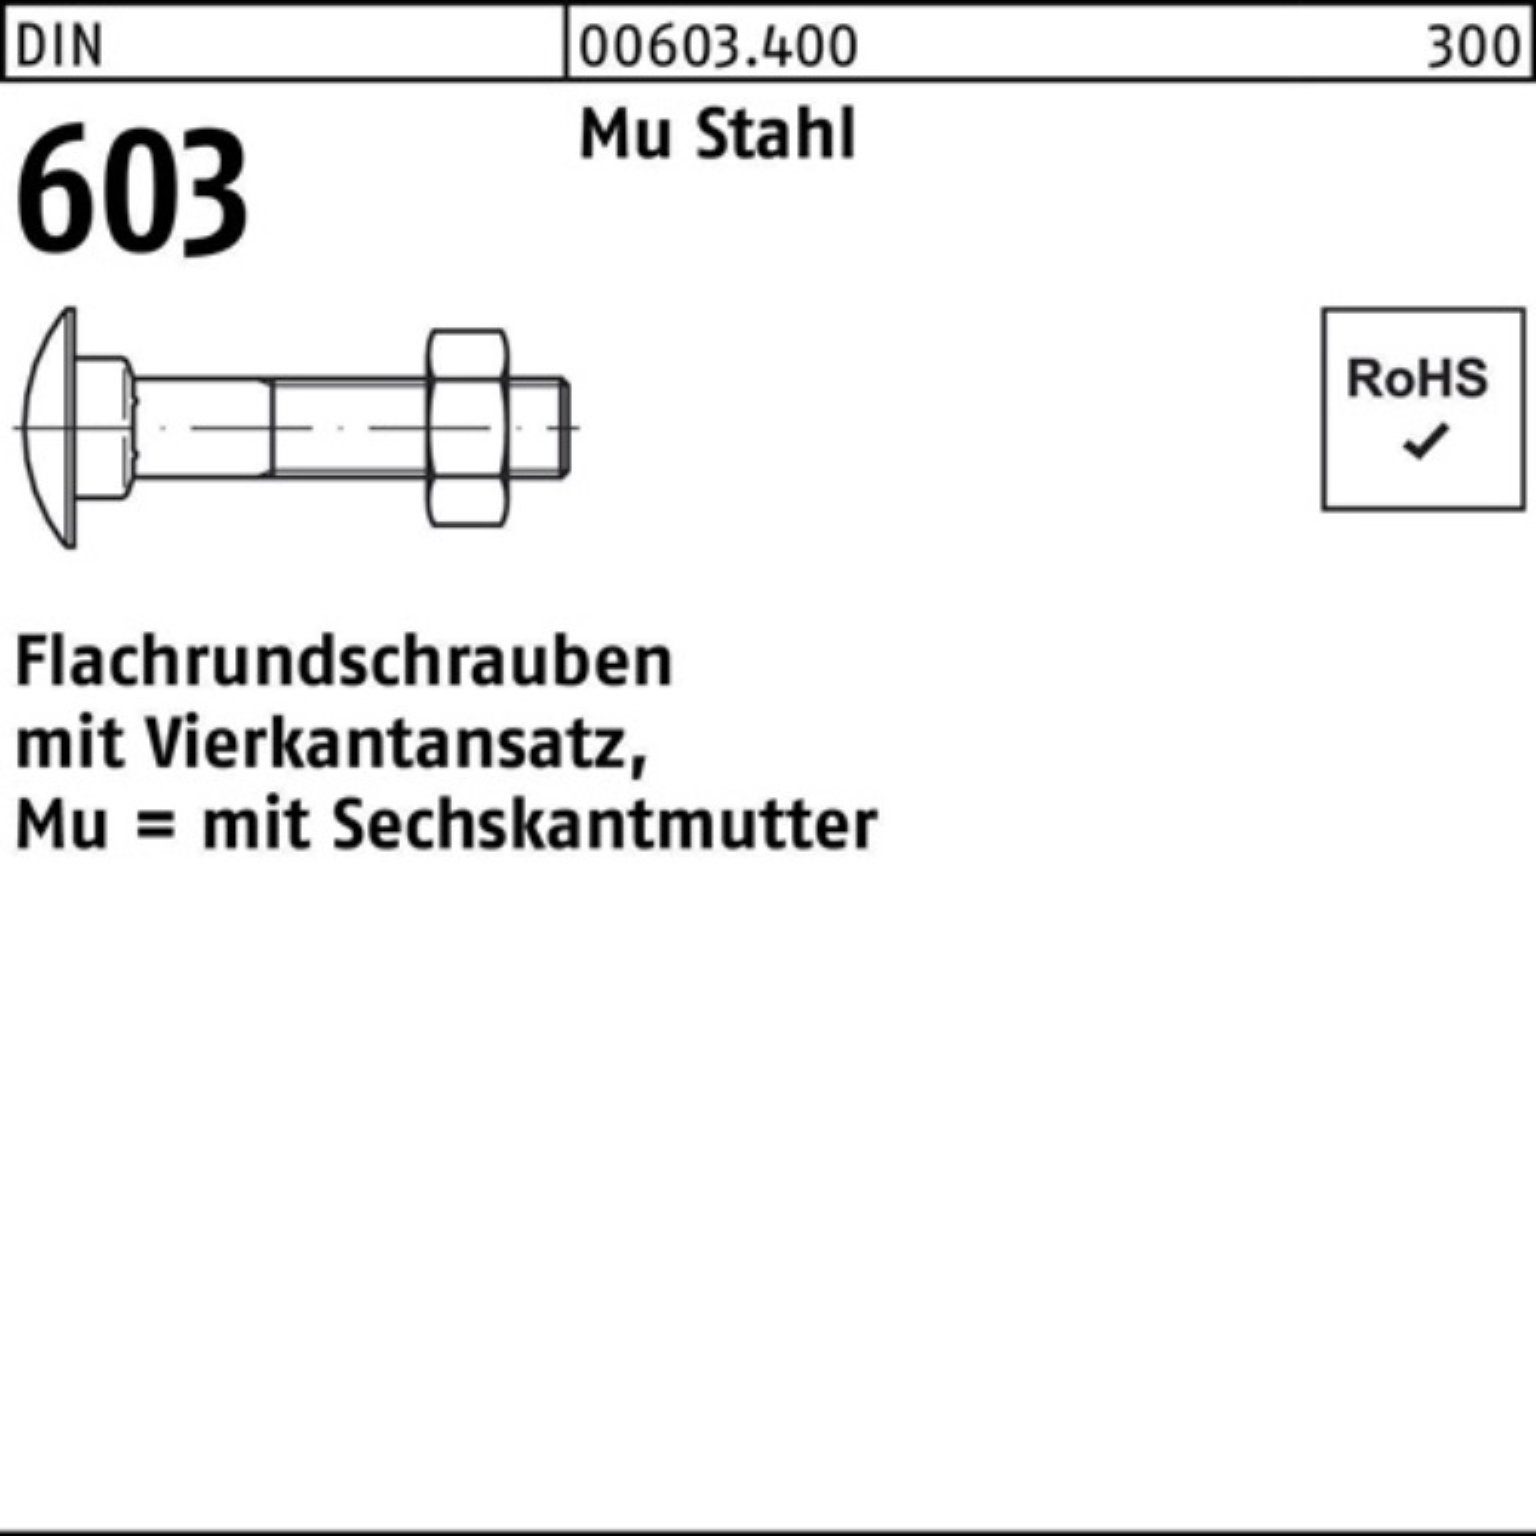 Pack Flachrundschraube 603 M10x180 DIN 100er Reyher Vierkantansatz/6-ktmutter Schraube